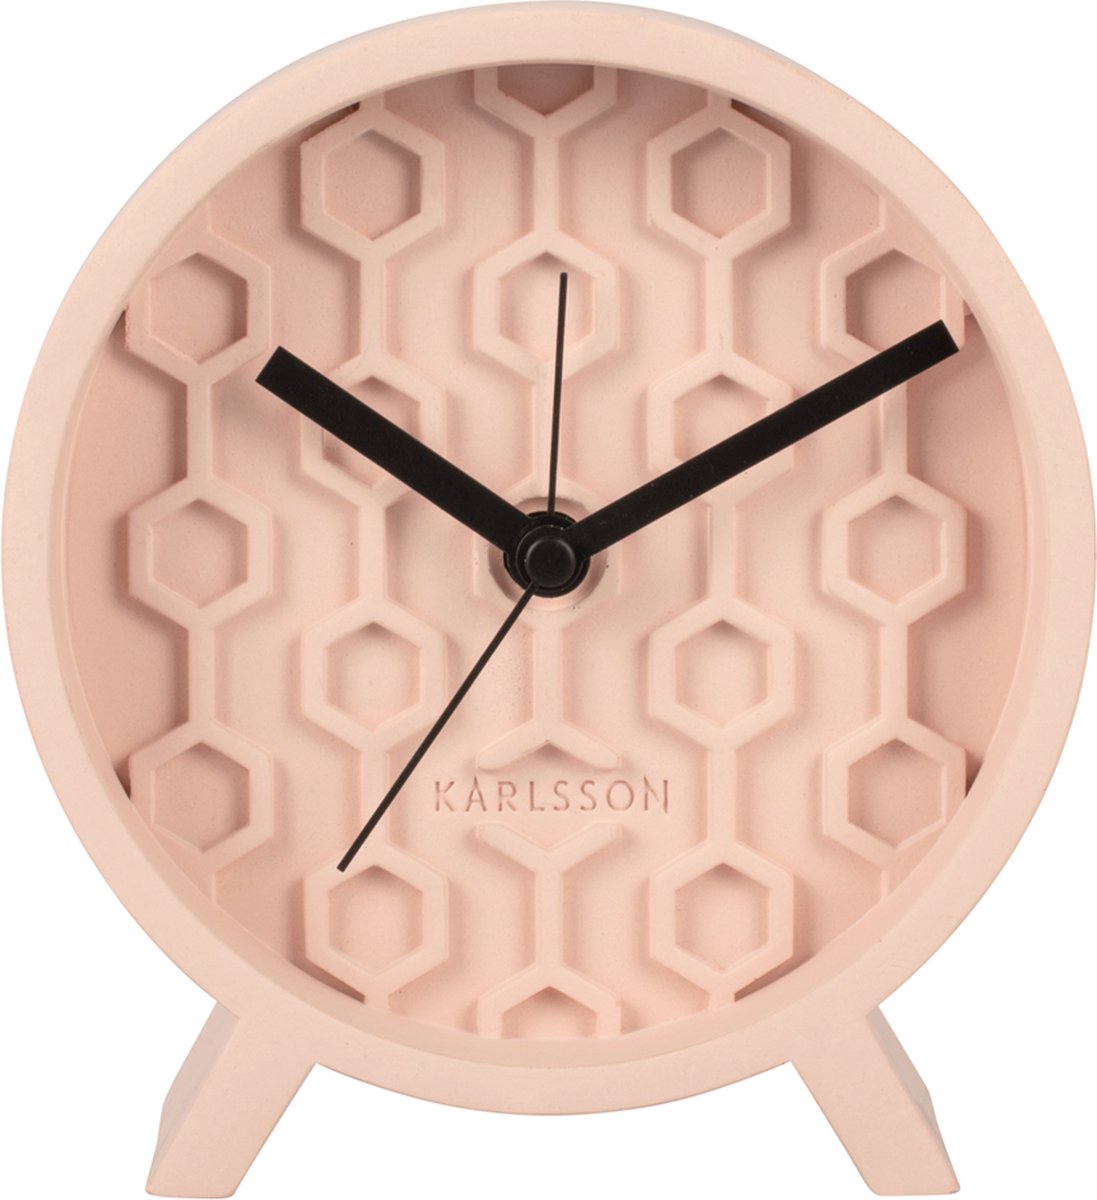 Alarmklok Honeycomb - Beton - Roze